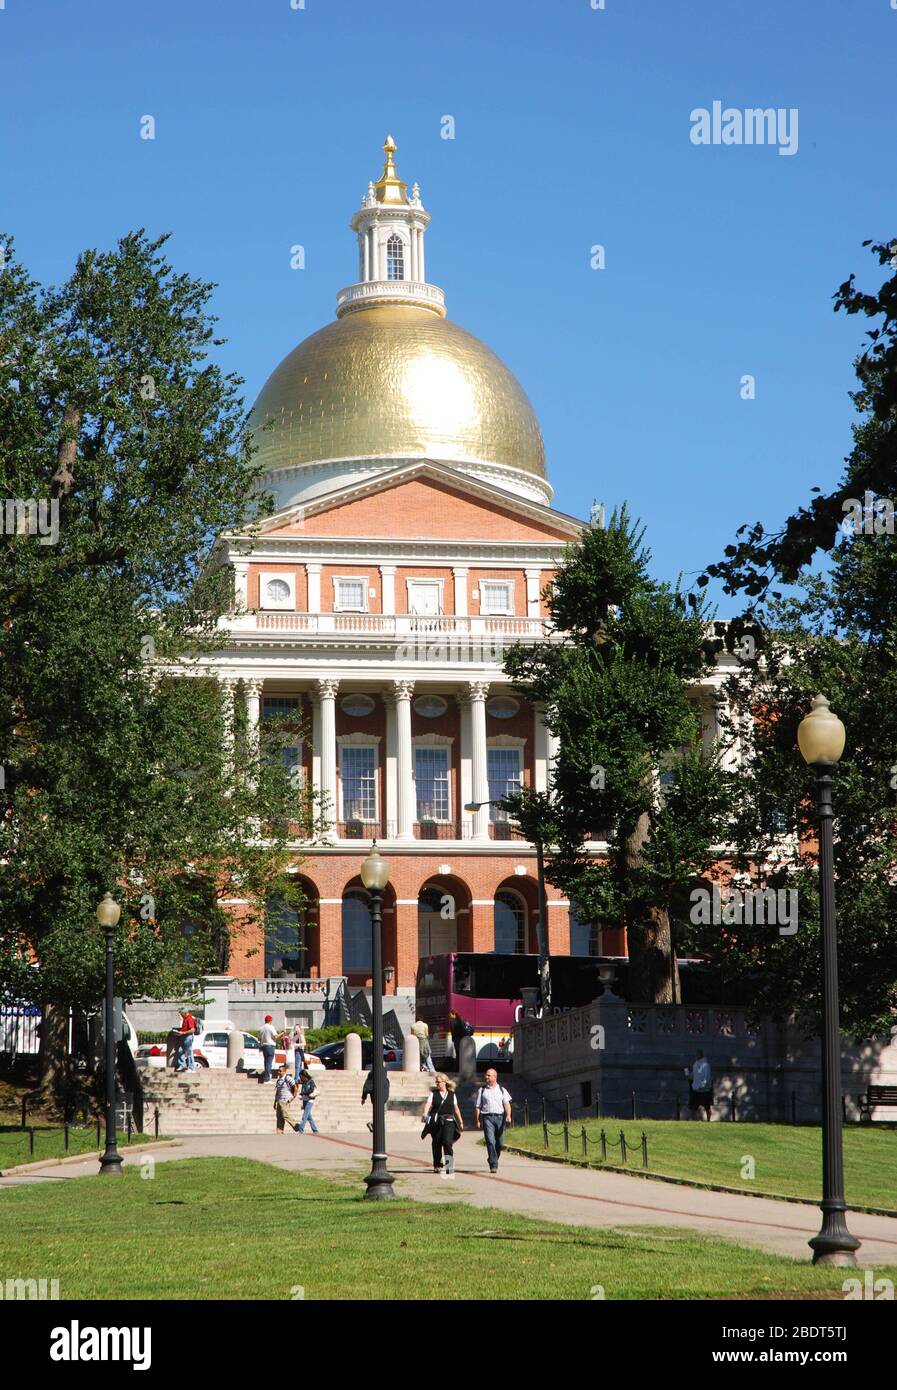 Boston, Massachusetts - September 2008: The Massachusetts State House with its golden dome overlooks Boston Common Stock Photo